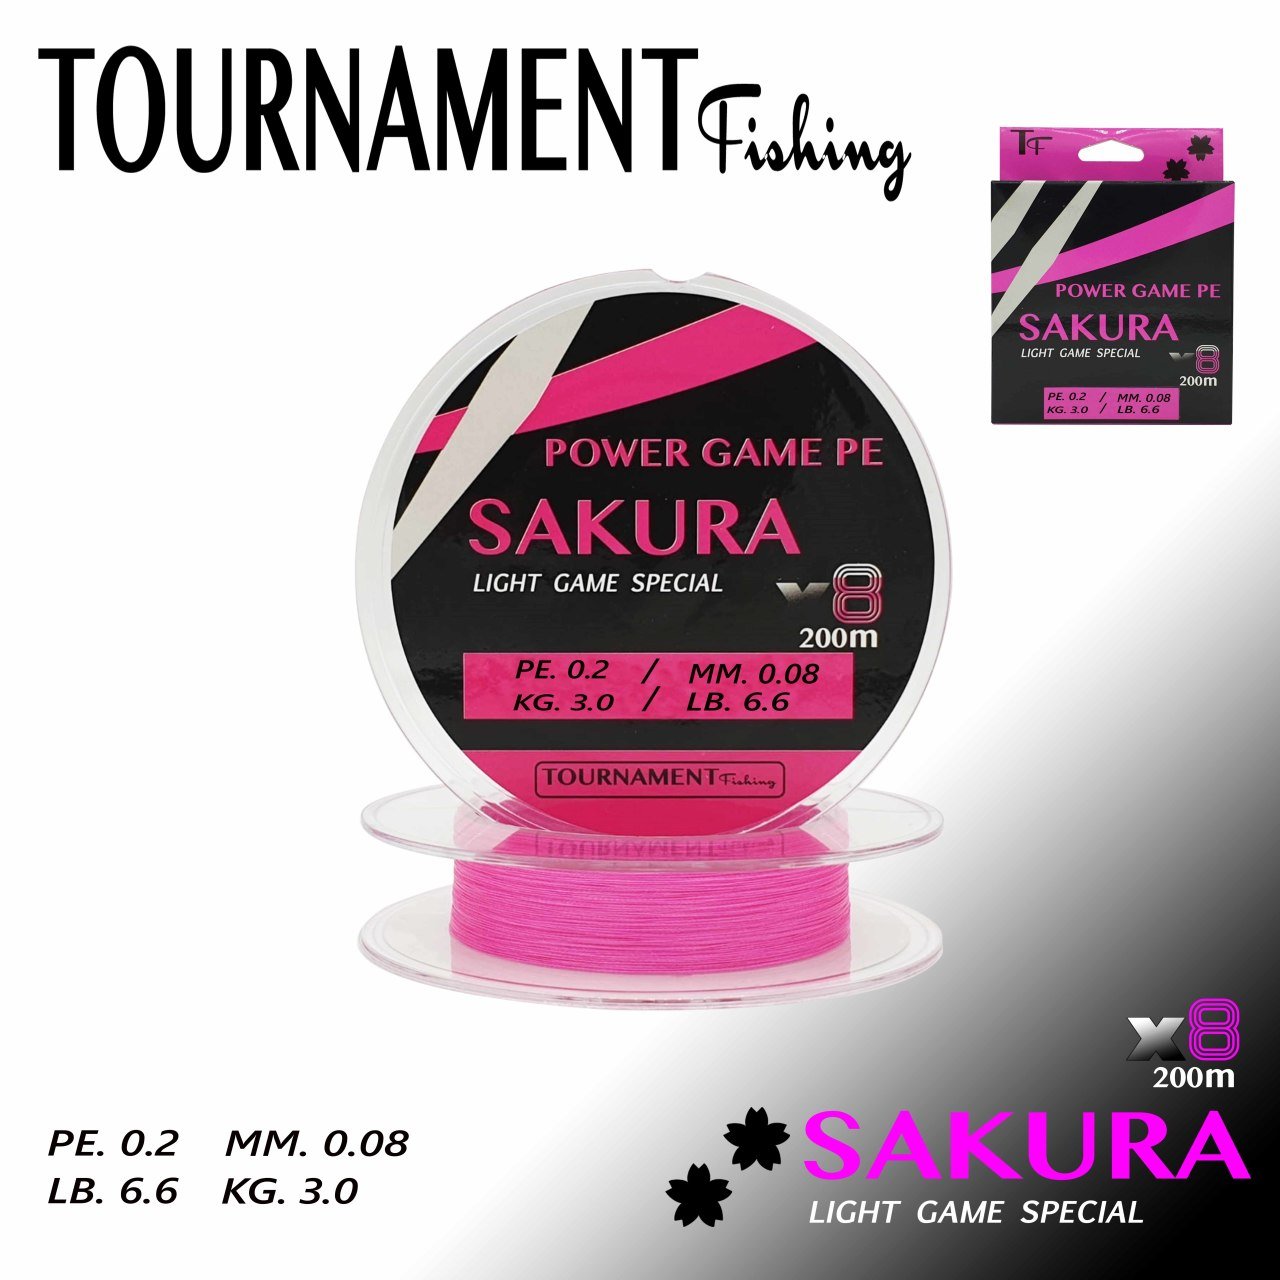 TOURNAMENT fishing Power game pe SAKURA Light Game Special X8 PE.0.2/MM0.08 KG3.0/LB.6.6